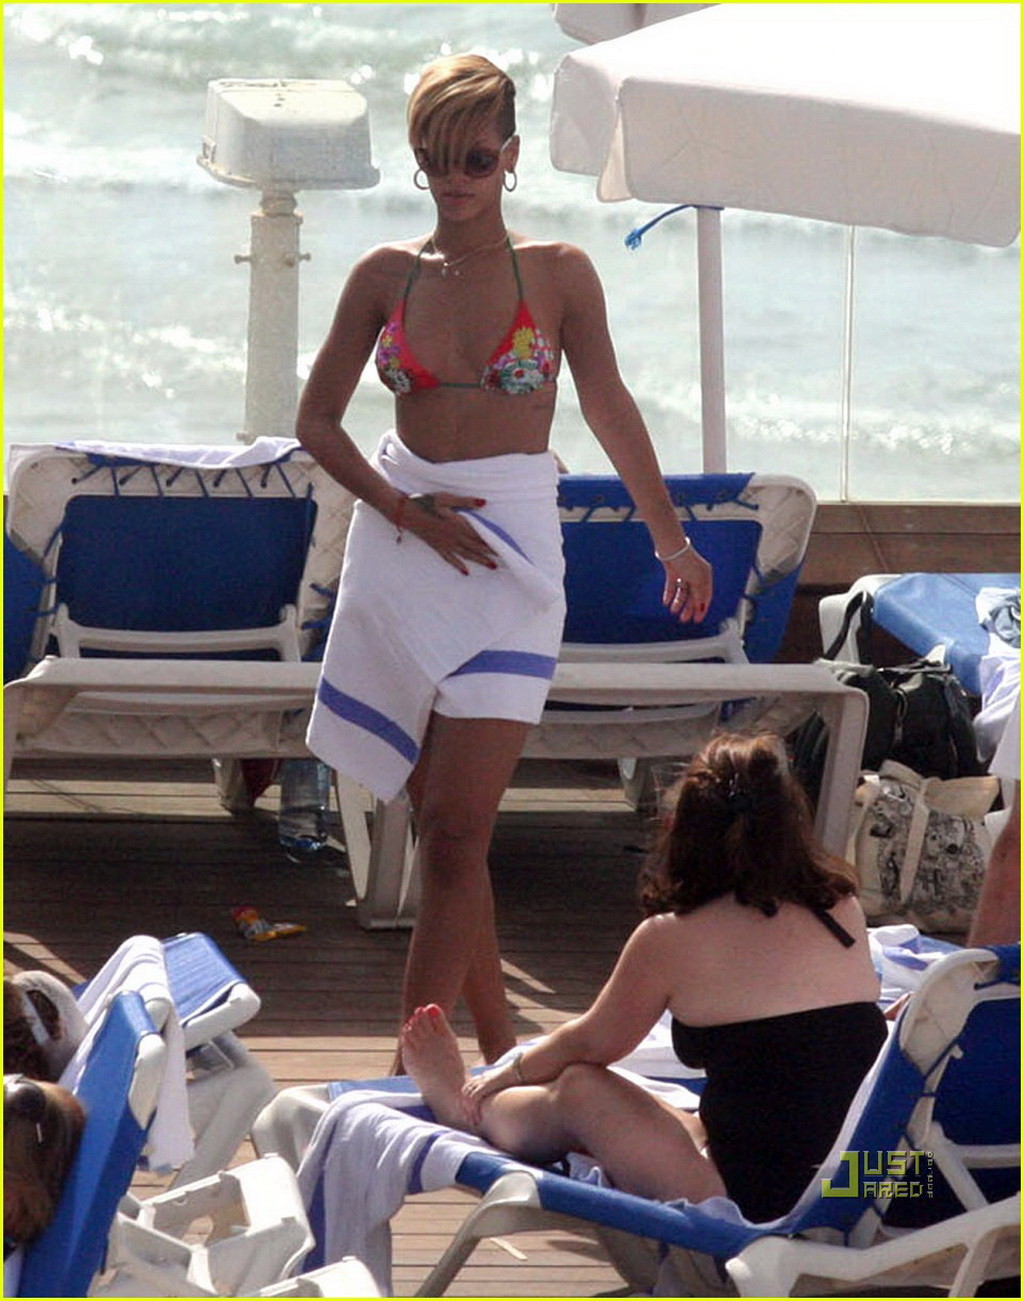 Rihanna luciendo un diminuto bikini junto a la piscina en tel aviv, israel
 #75347980